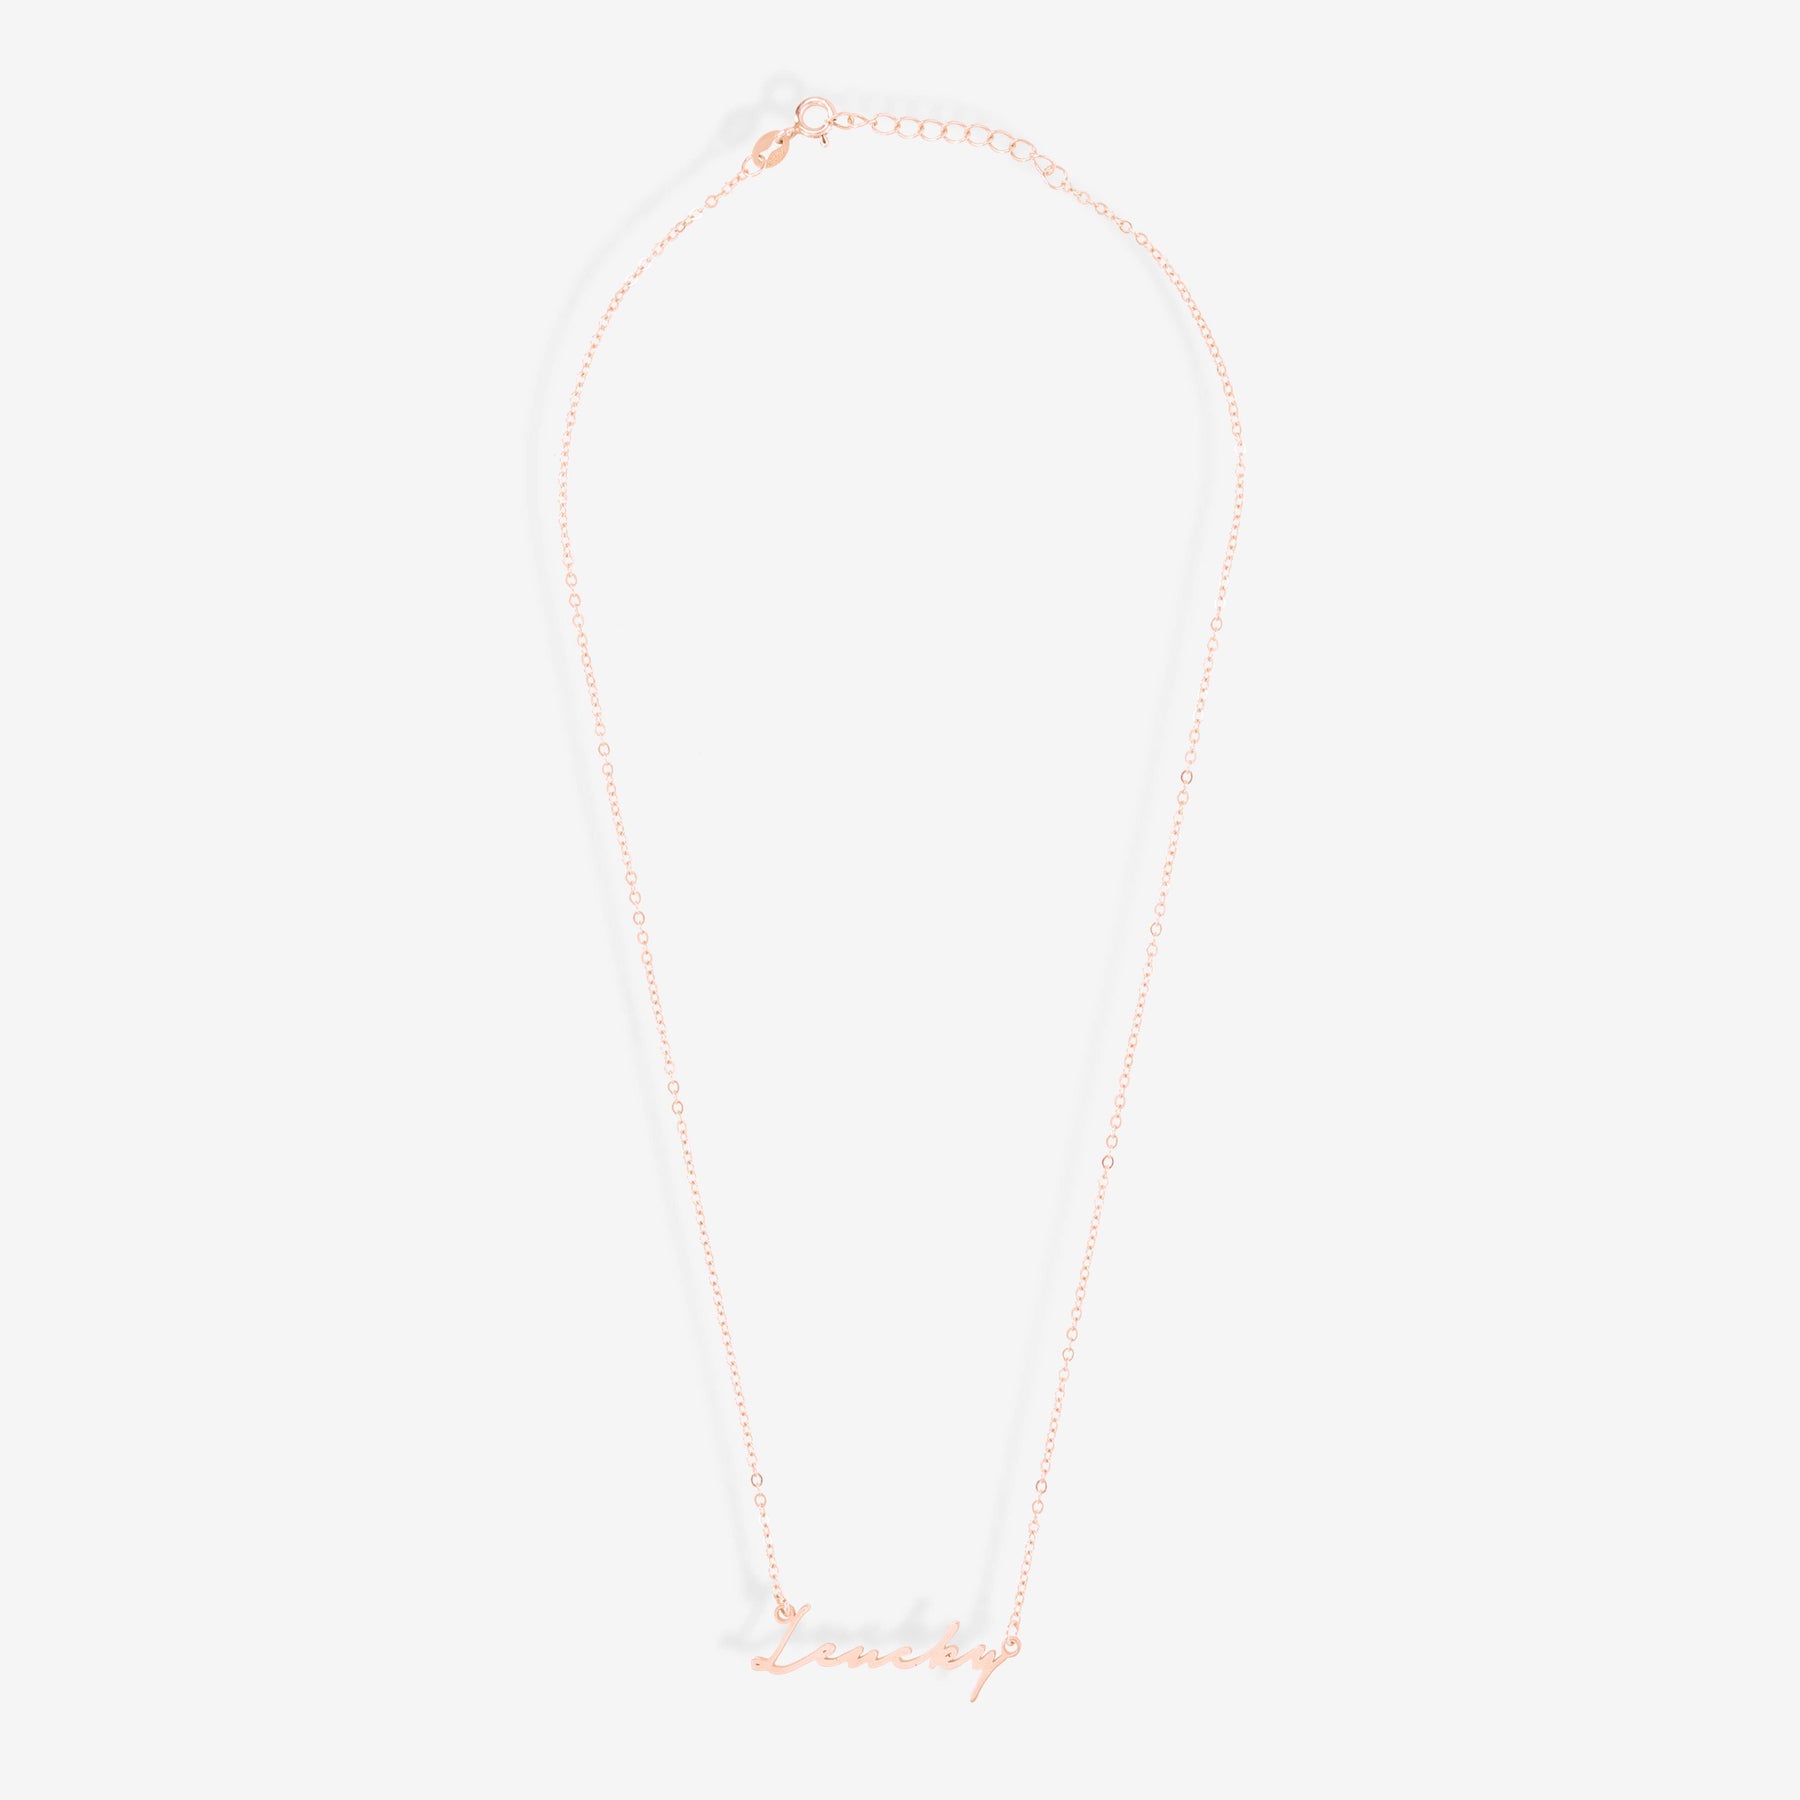 Custom Name Necklace Necklace Custom Paw Jewelry 18K Rose Gold Vermeil 14''/35.5cm 